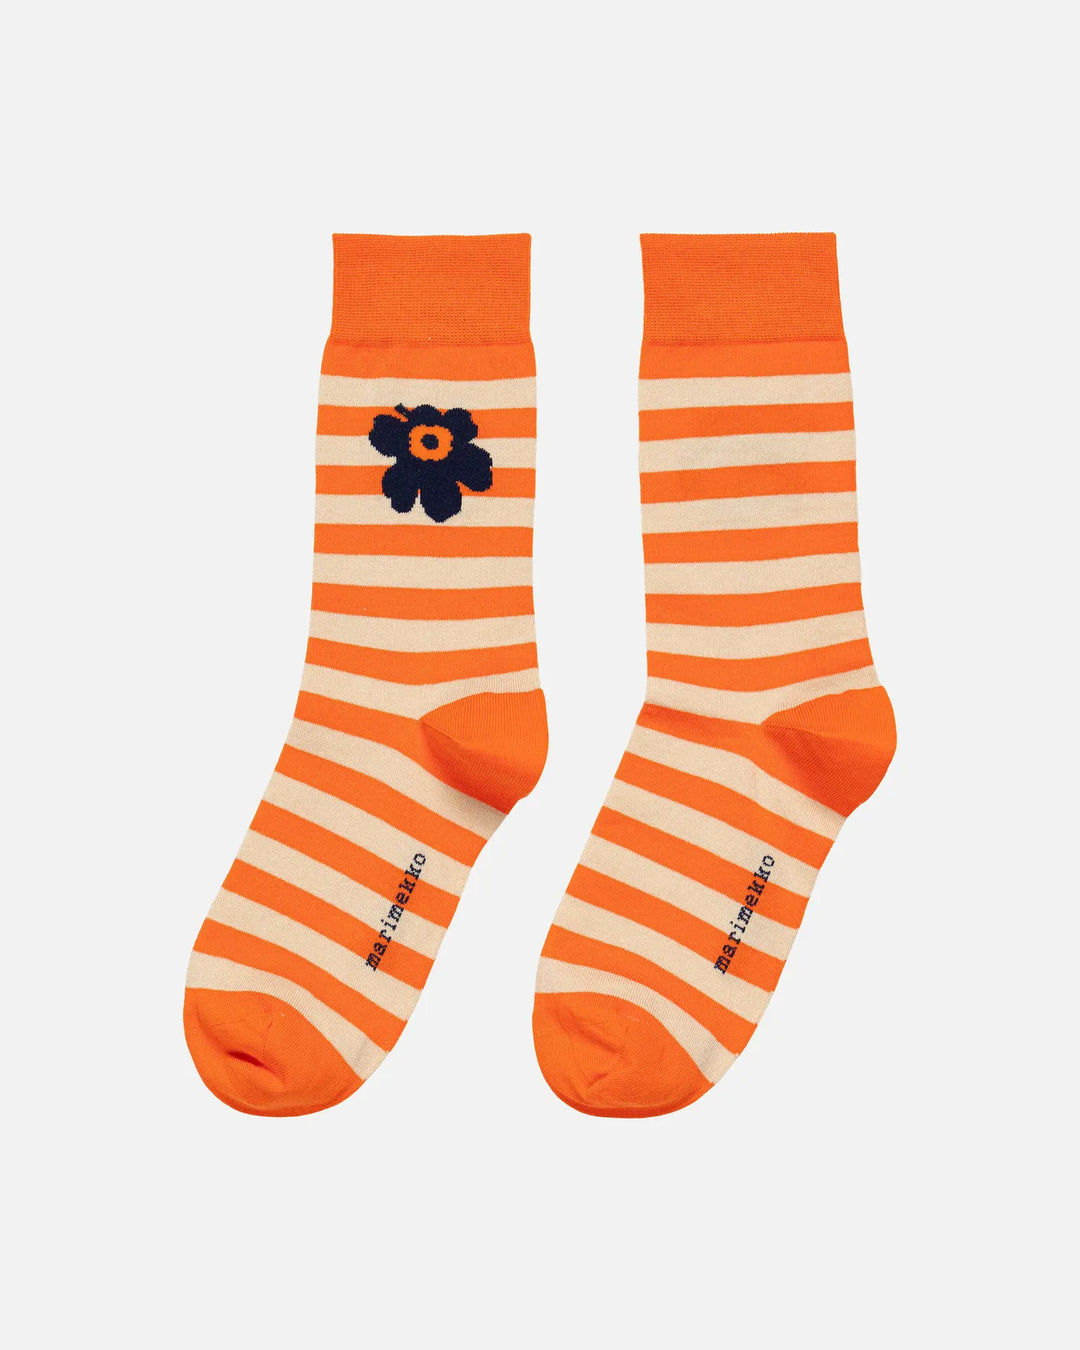 Kasvaa Tasaraita Socks, Orange/Beige